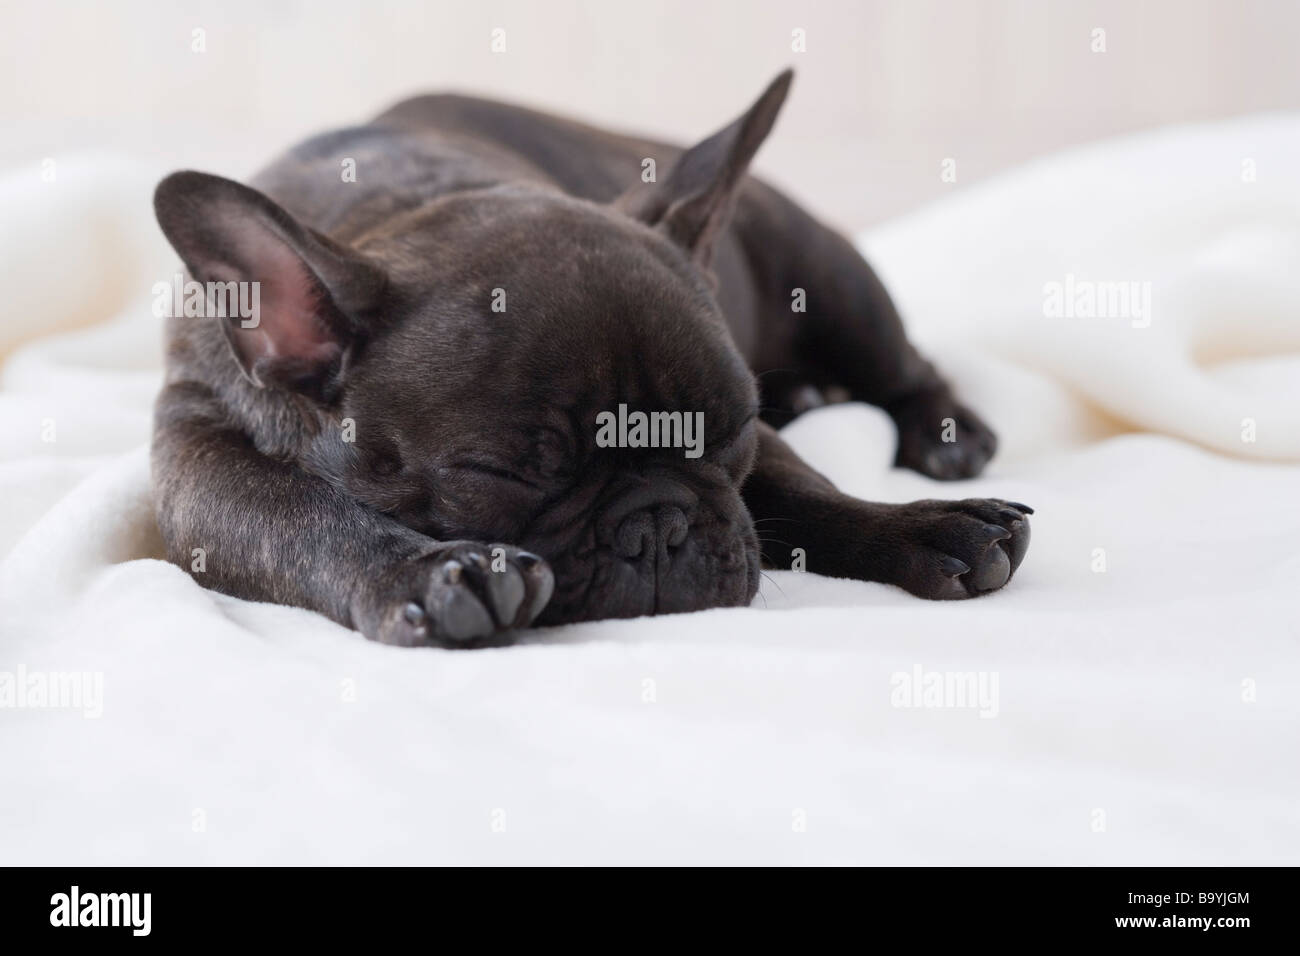 French bulldog sleeping on a blanket Stock Photo